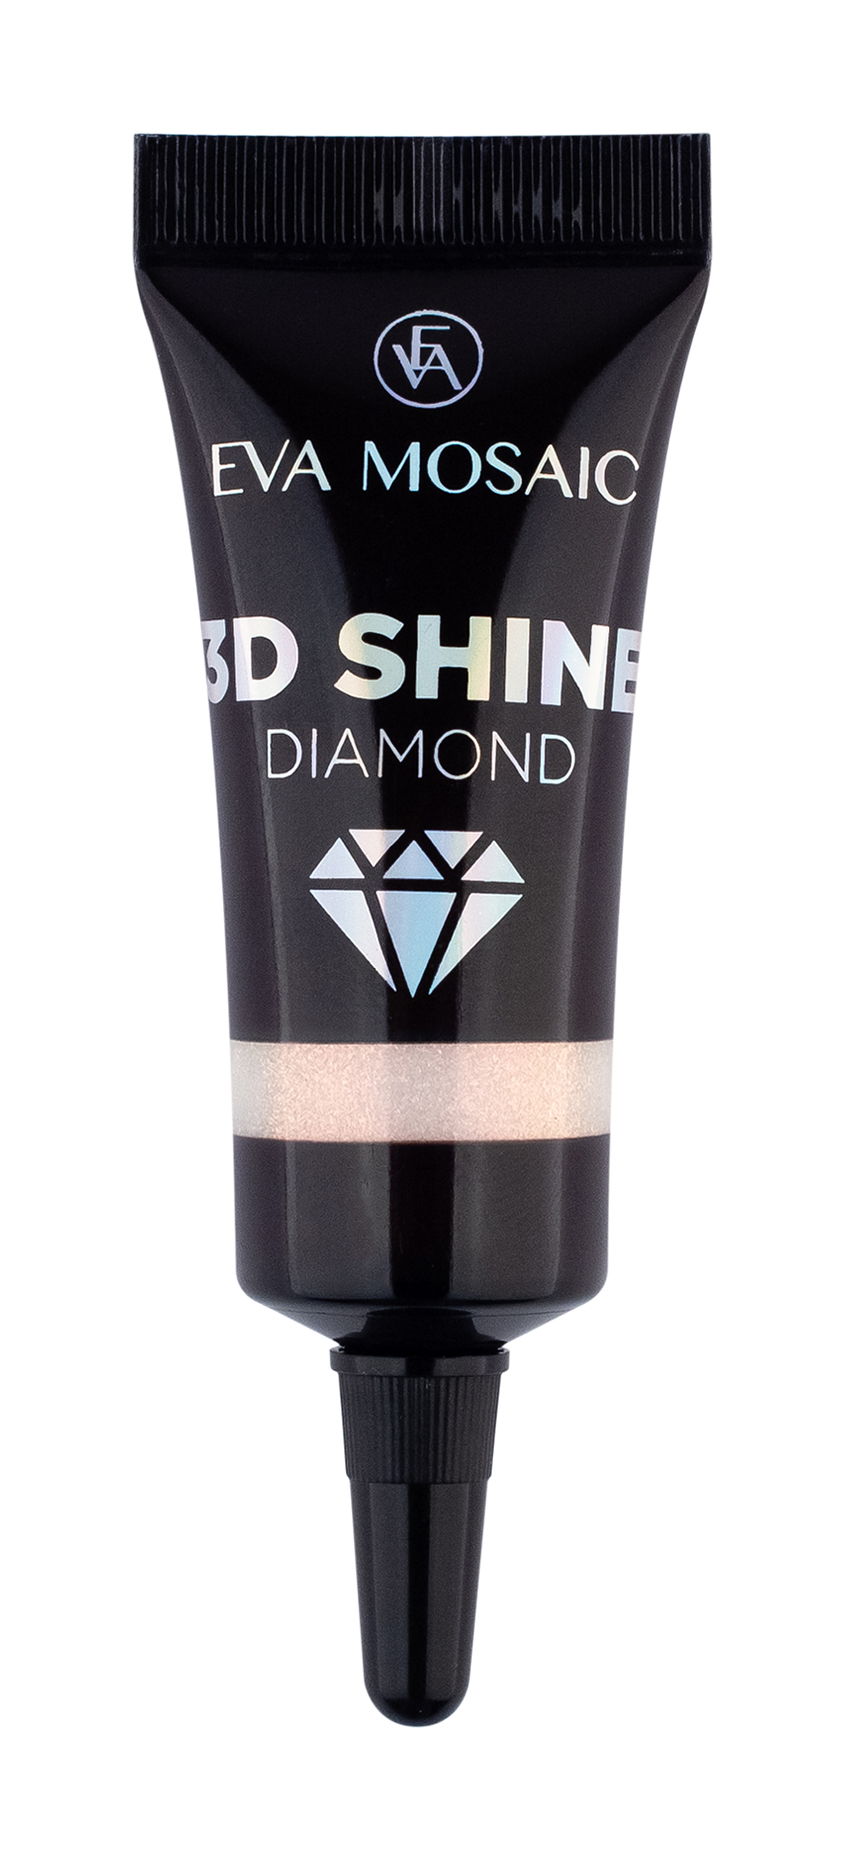 Блёстки для макияжа век и лица Eva Mosaic 3D Shine Diamond Glitter Розовое золото farm stay diamond shine impact тушь для ресниц 12 г 3 варианта